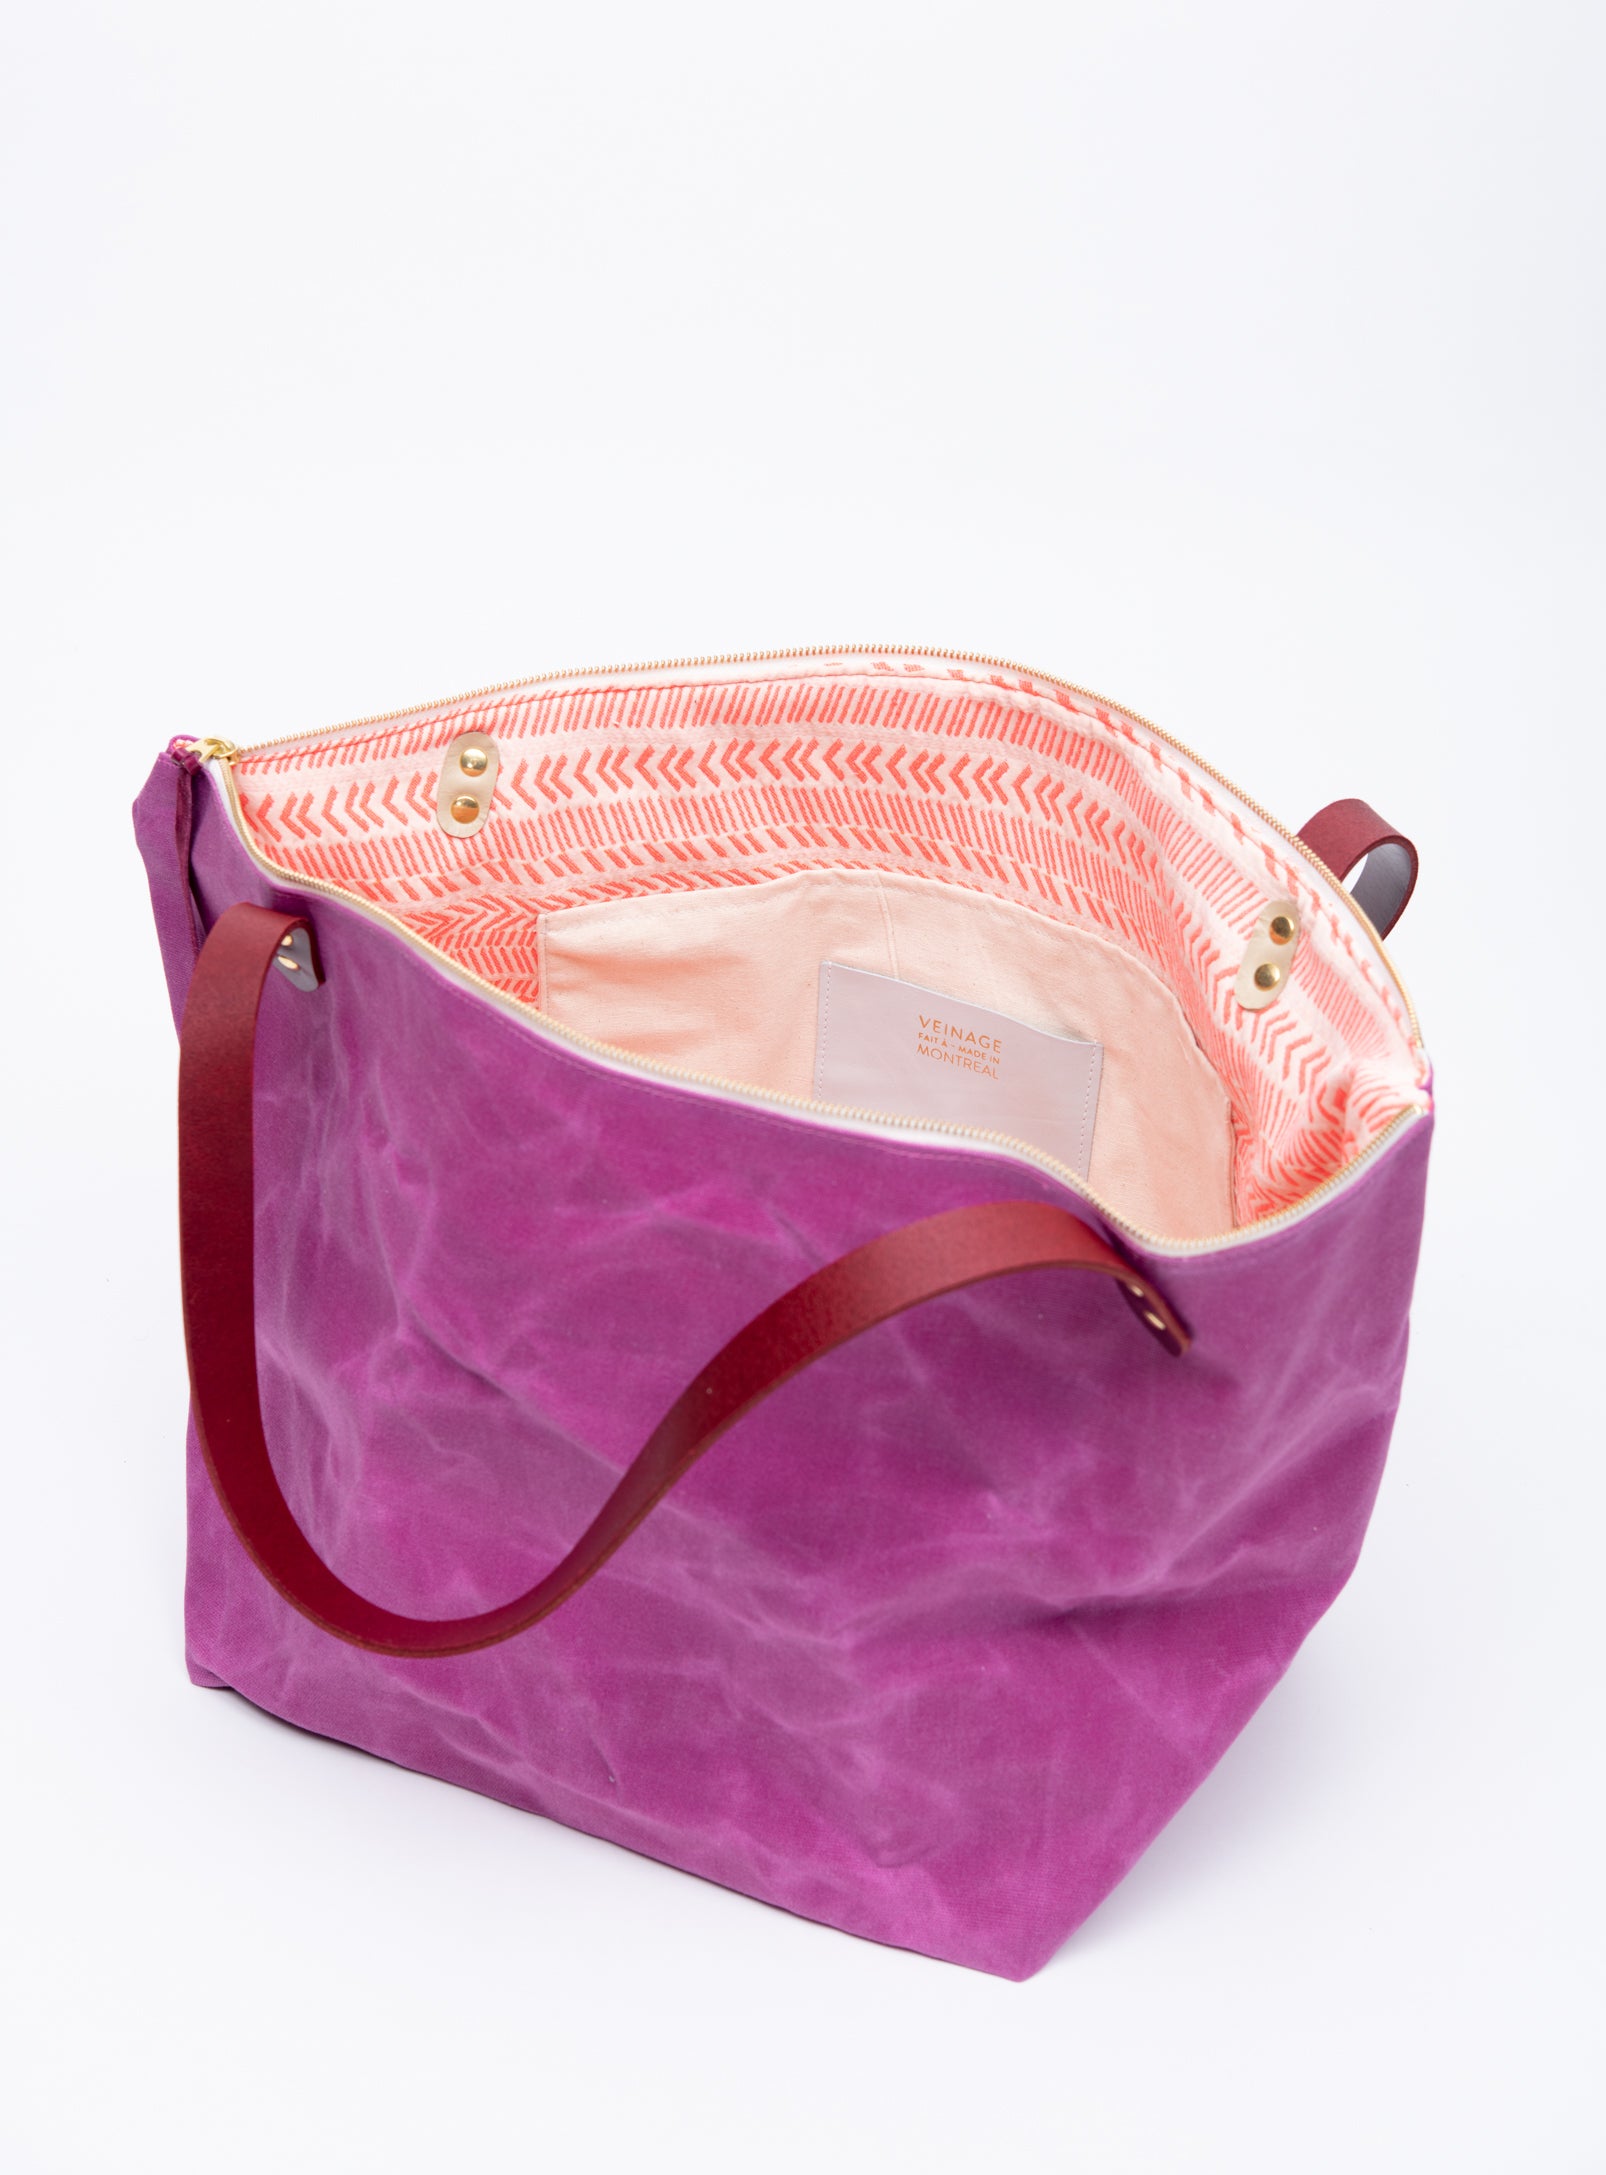 Veinage Travel Bag Weekender Bag in waxed canvas FRONTENAC model, handmade in Montreal, Canada